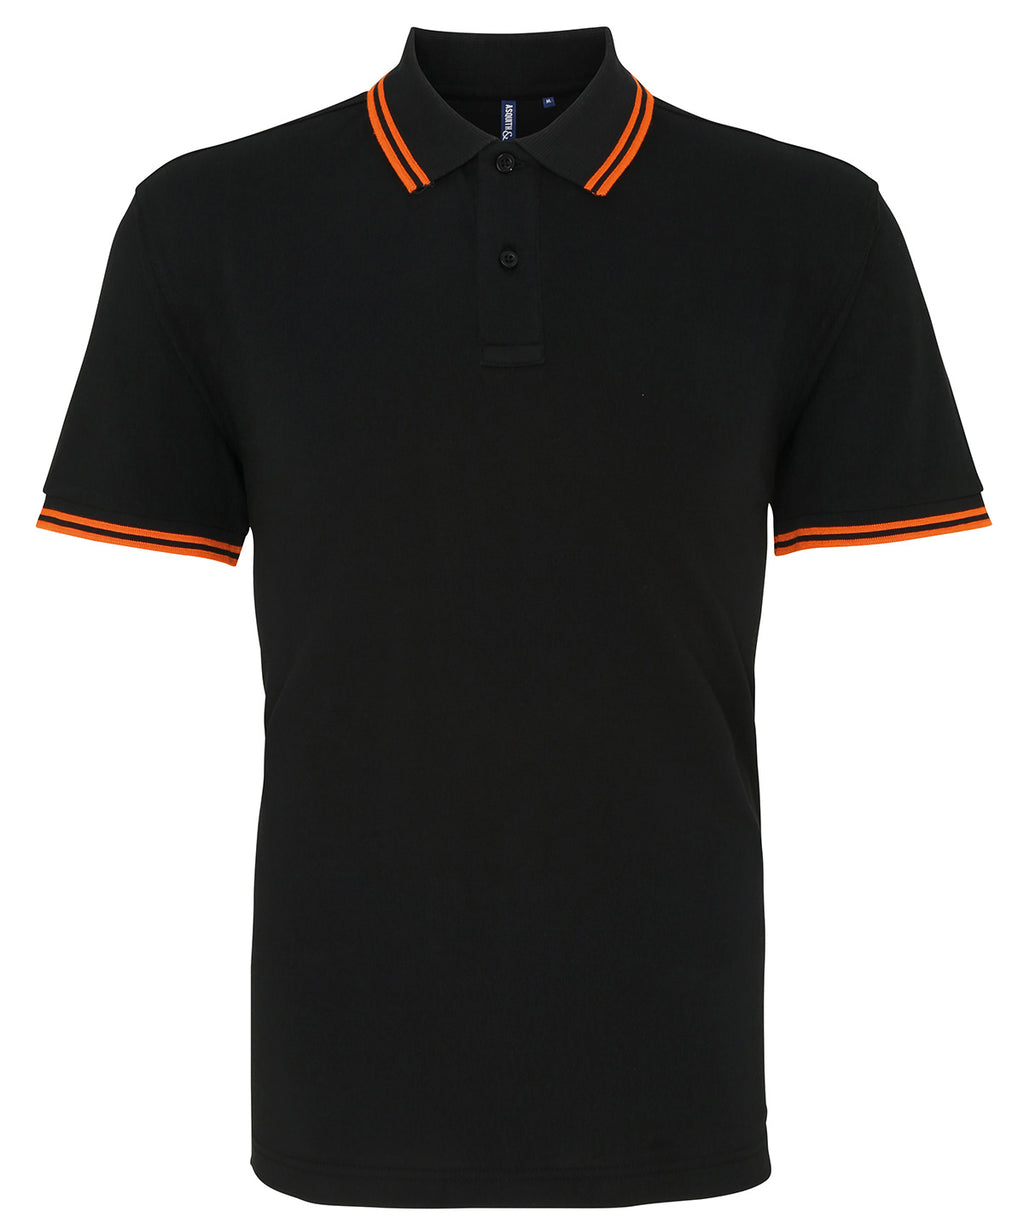 Mens Tipped Short Sleeve Polo Shirt - Black/Orange